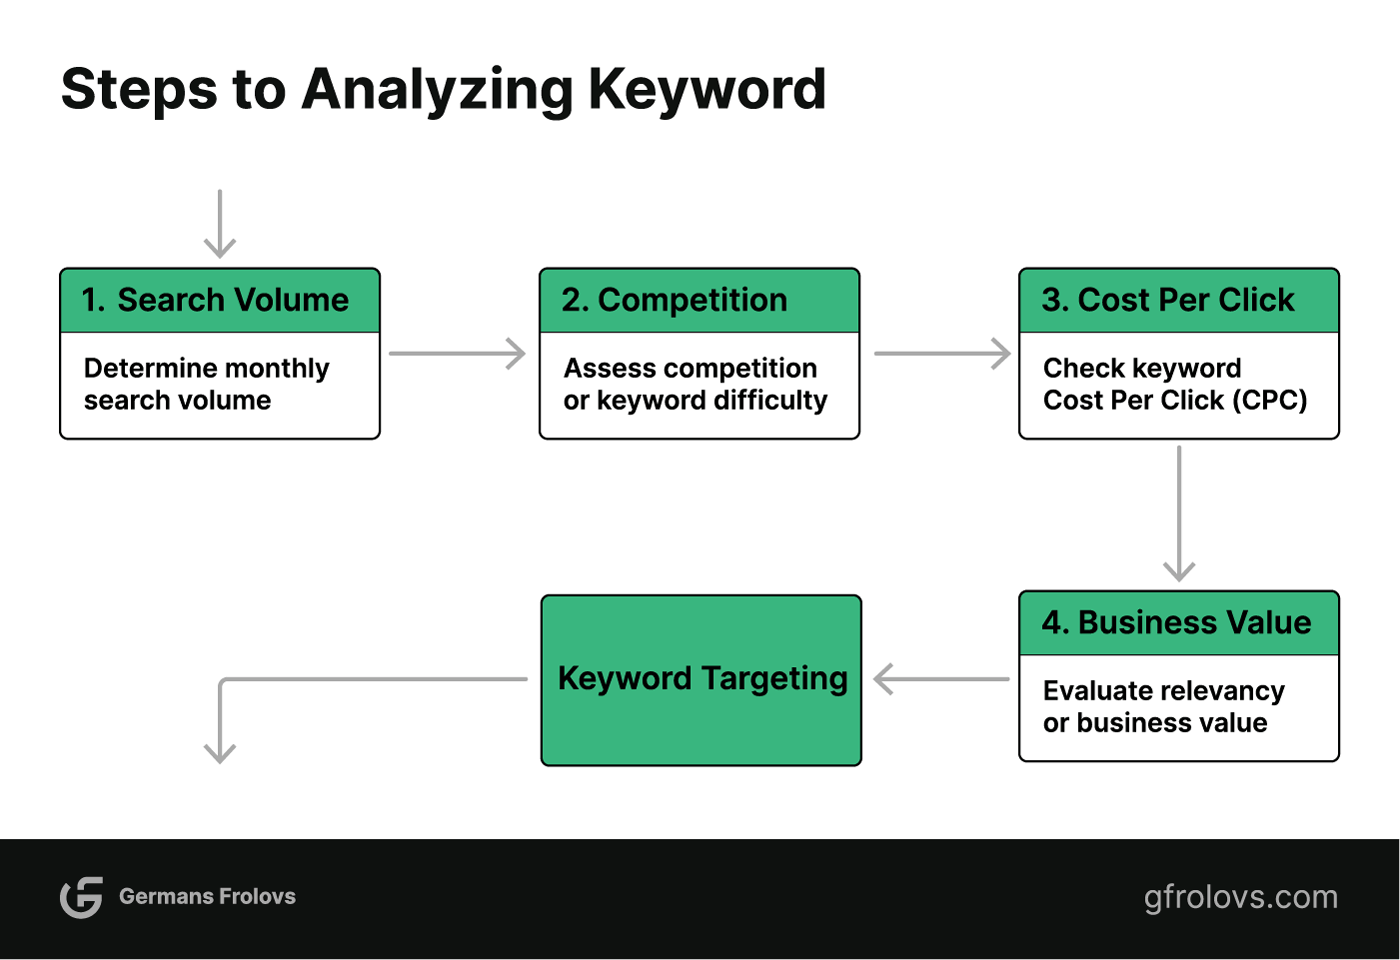 Steps to analyzing keywords